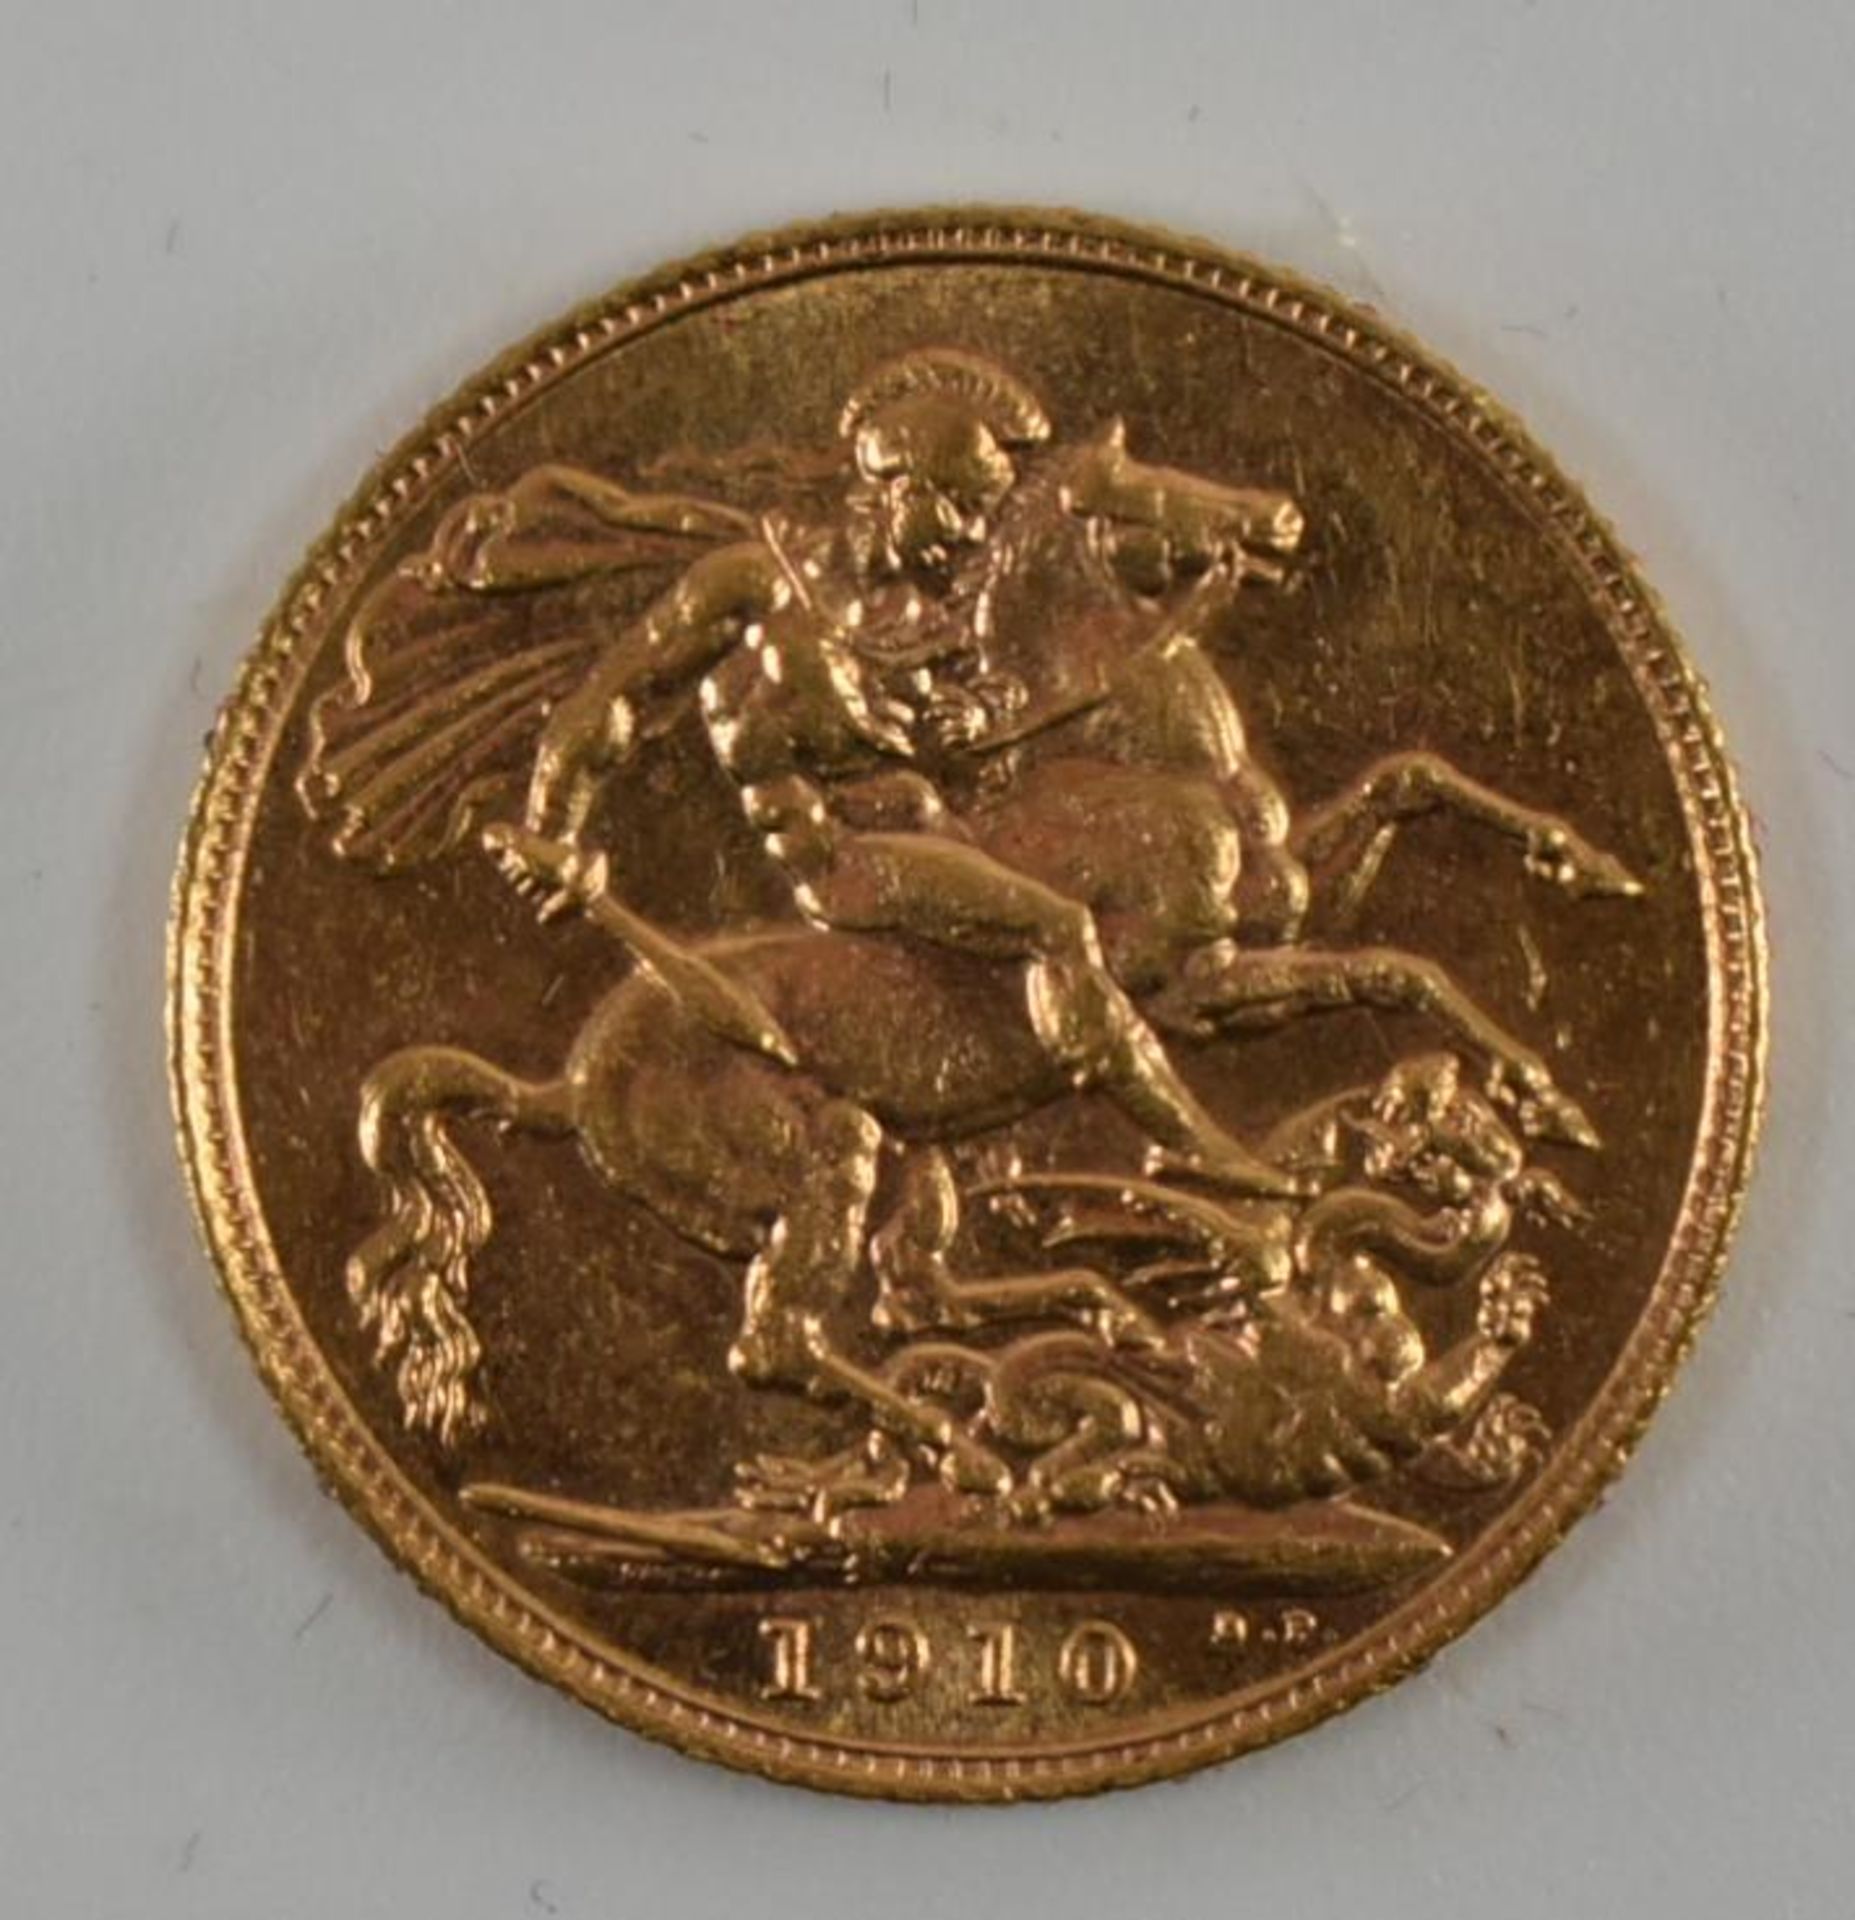 EDWARD VII 1910 22CT GOLD FULL SOVEREIGN - Image 3 of 3